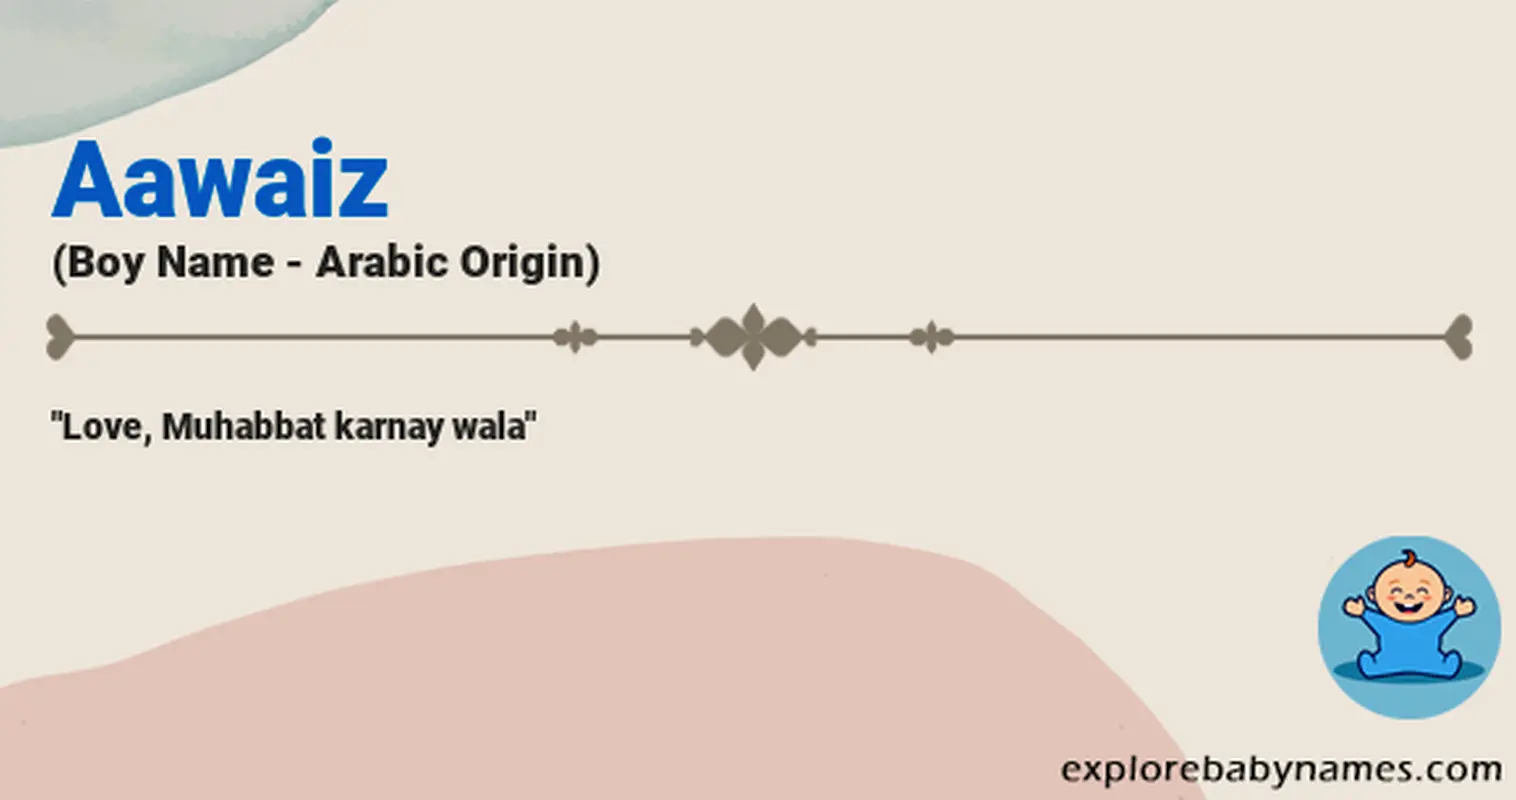 Meaning of Aawaiz